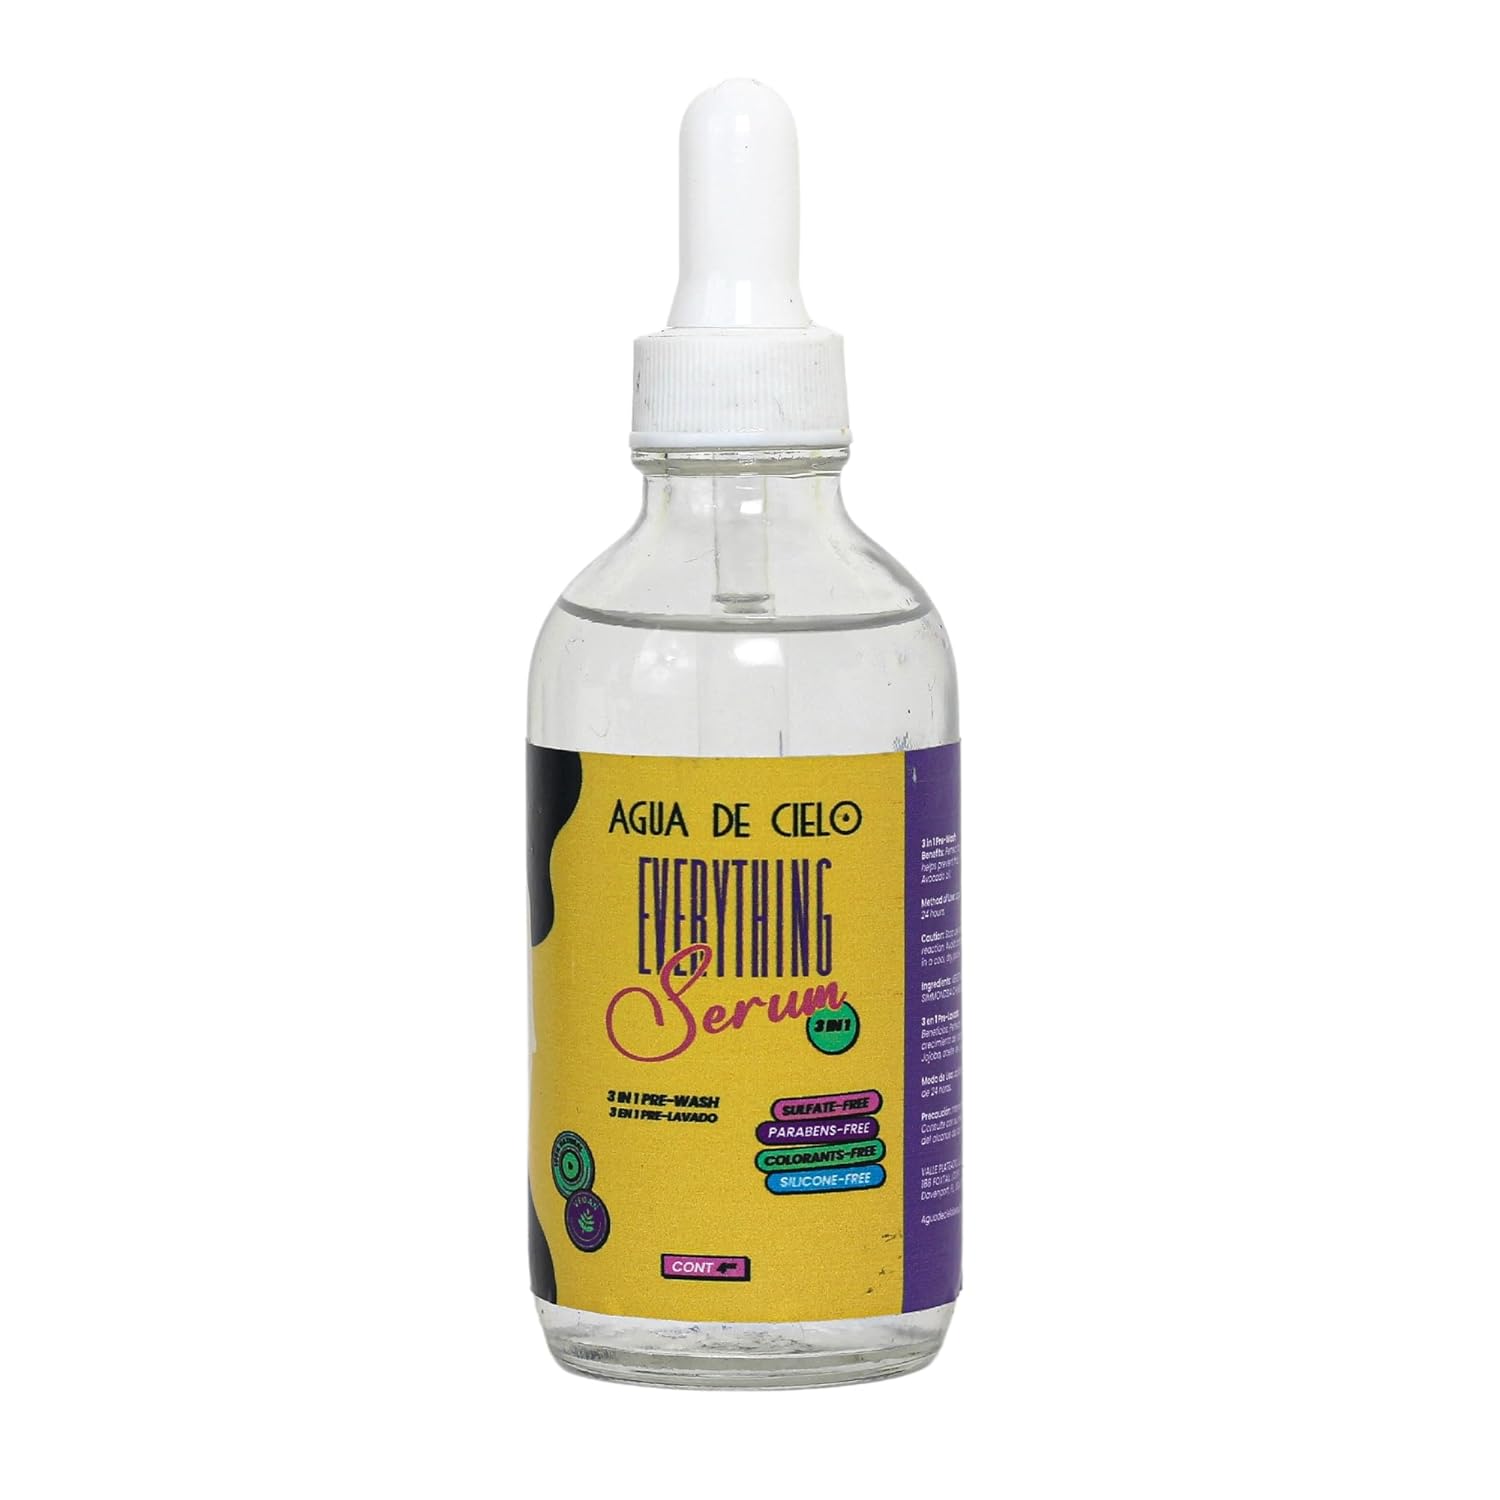 Agua de Cielo Everything Serum - Organic Hair Oil for Hair Growth, Anti-Frizz & Split Ends, Infused with Jojoba, Castor, Argan & Avocado Oil Blend, Nourishing & Anti-Aging Pre-Wash - 4